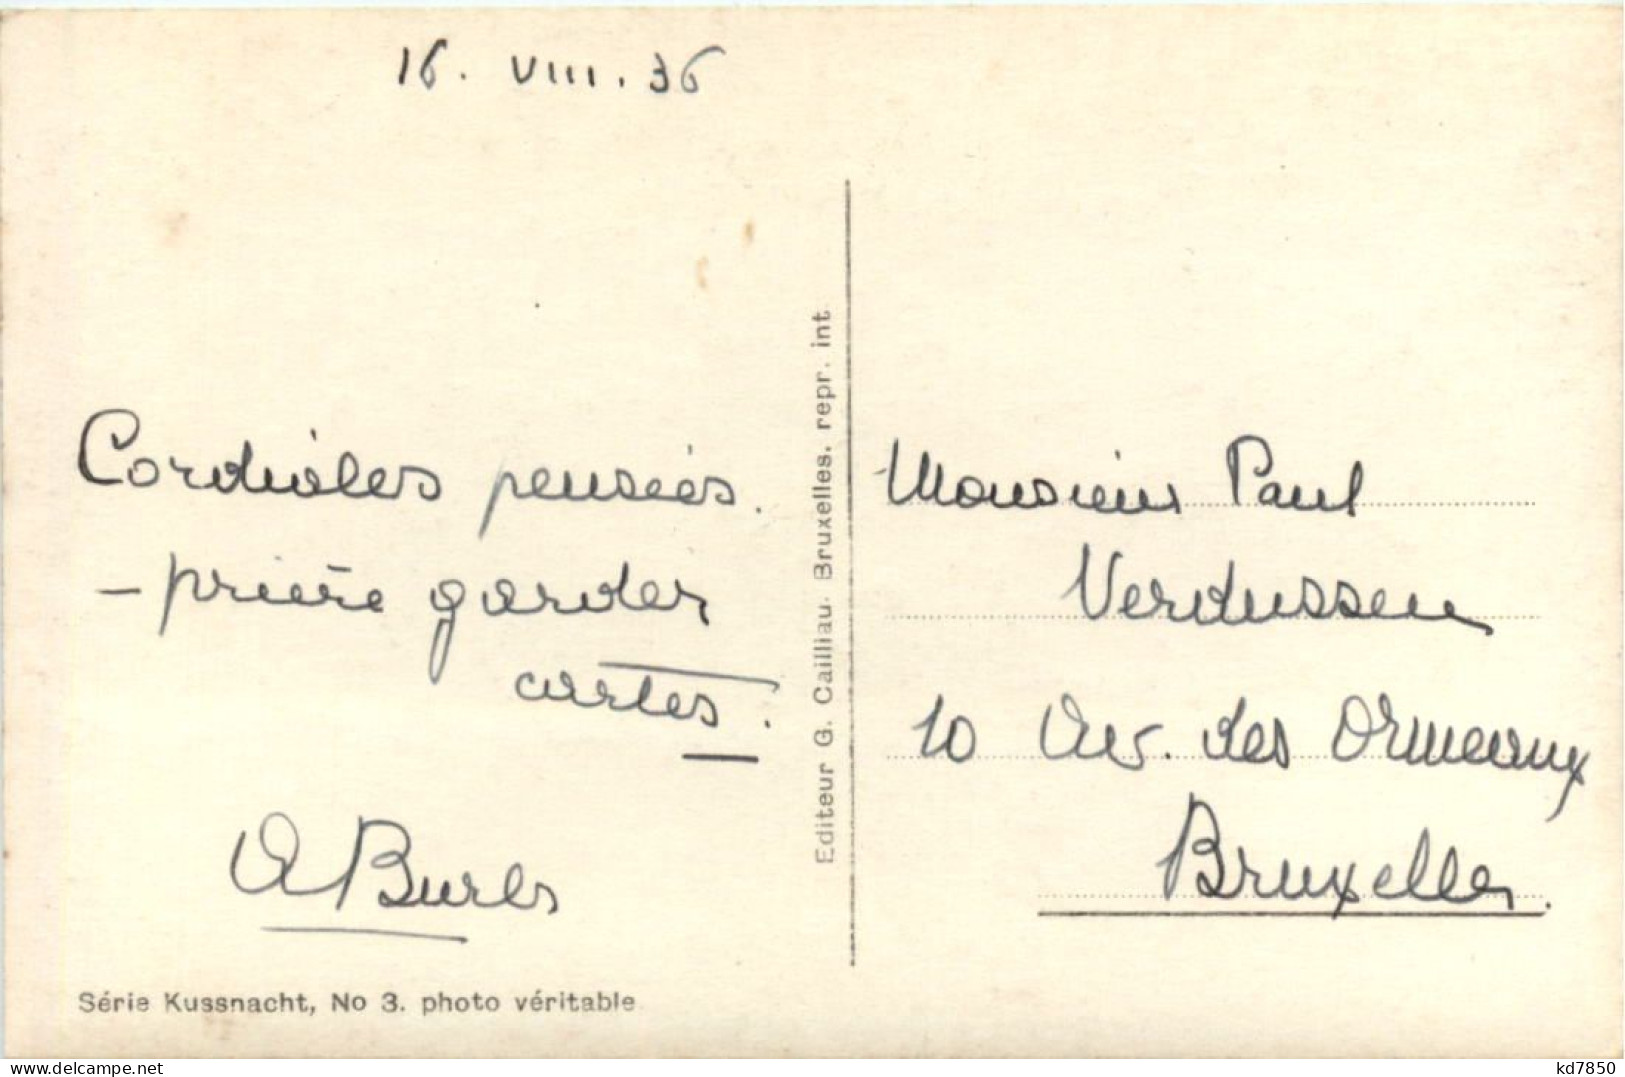 Küssnacht 1936 - Benediction De La Chapelle - Küssnacht